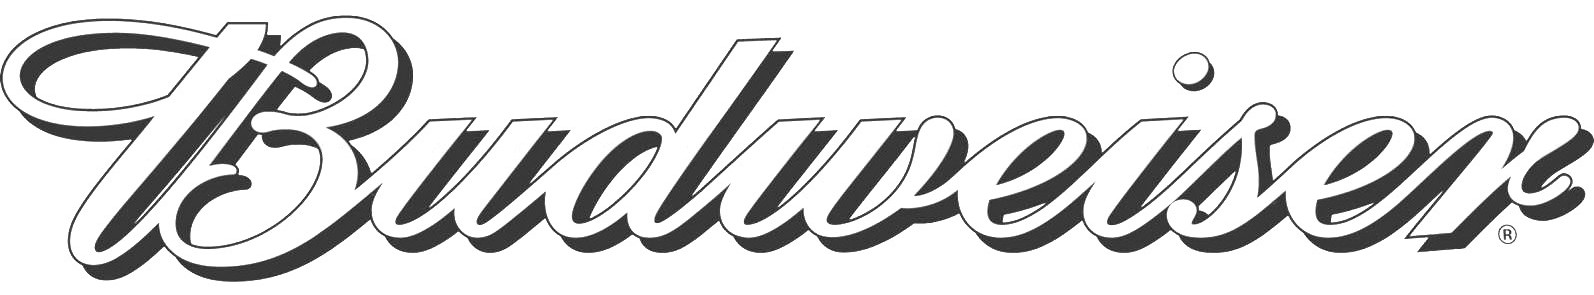 Copy Of Bud Racing Logo